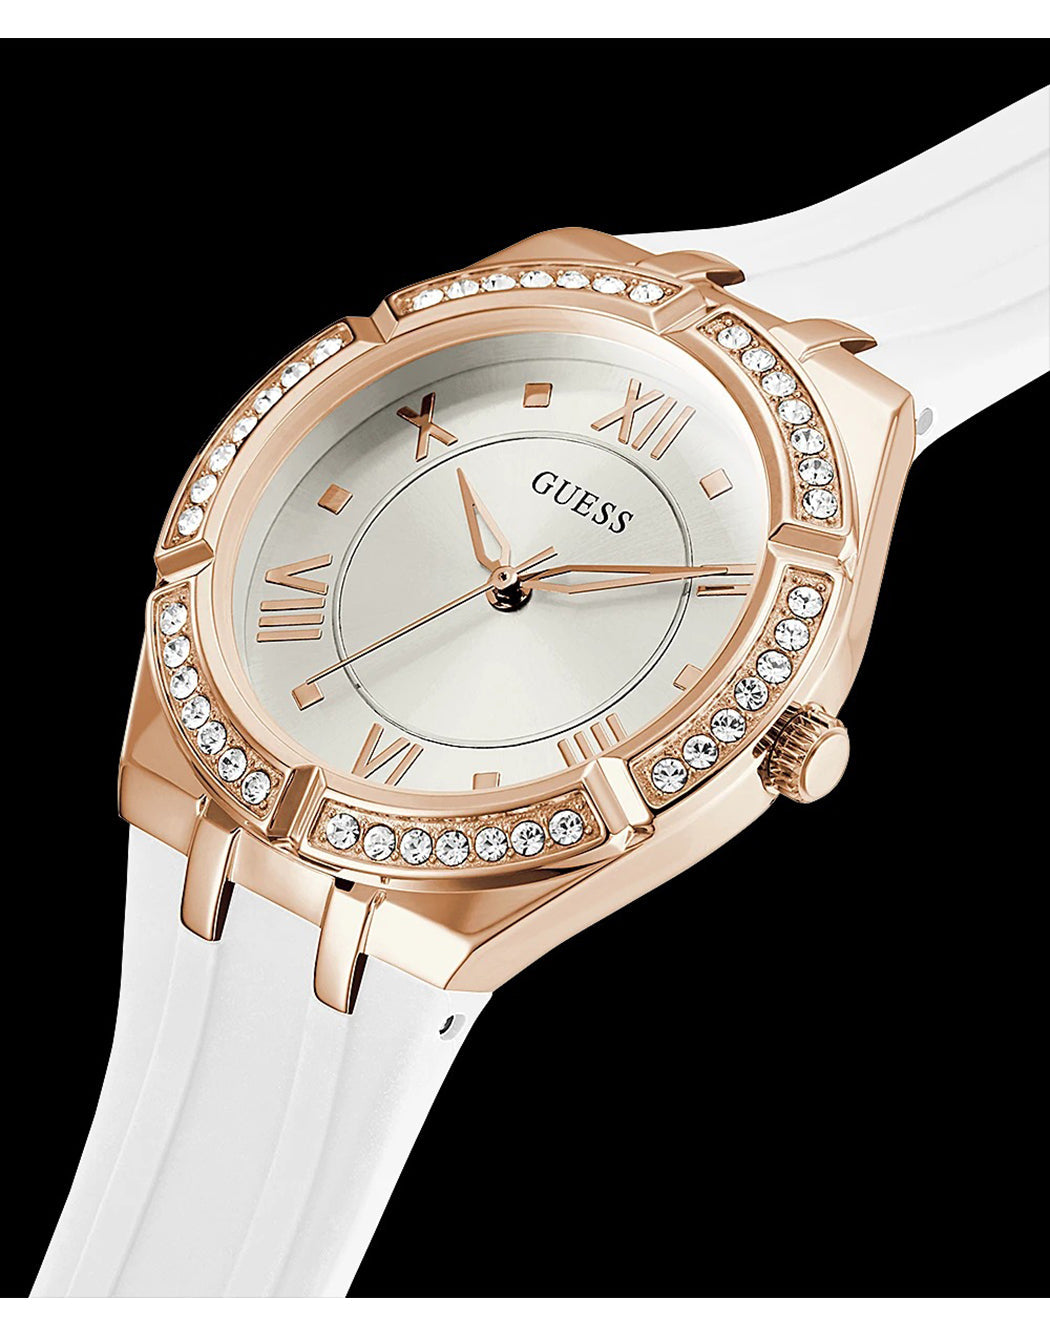 Guess Cosmo Diamonds White Dial White Rubber Strap Watch for Women - GW0034L2